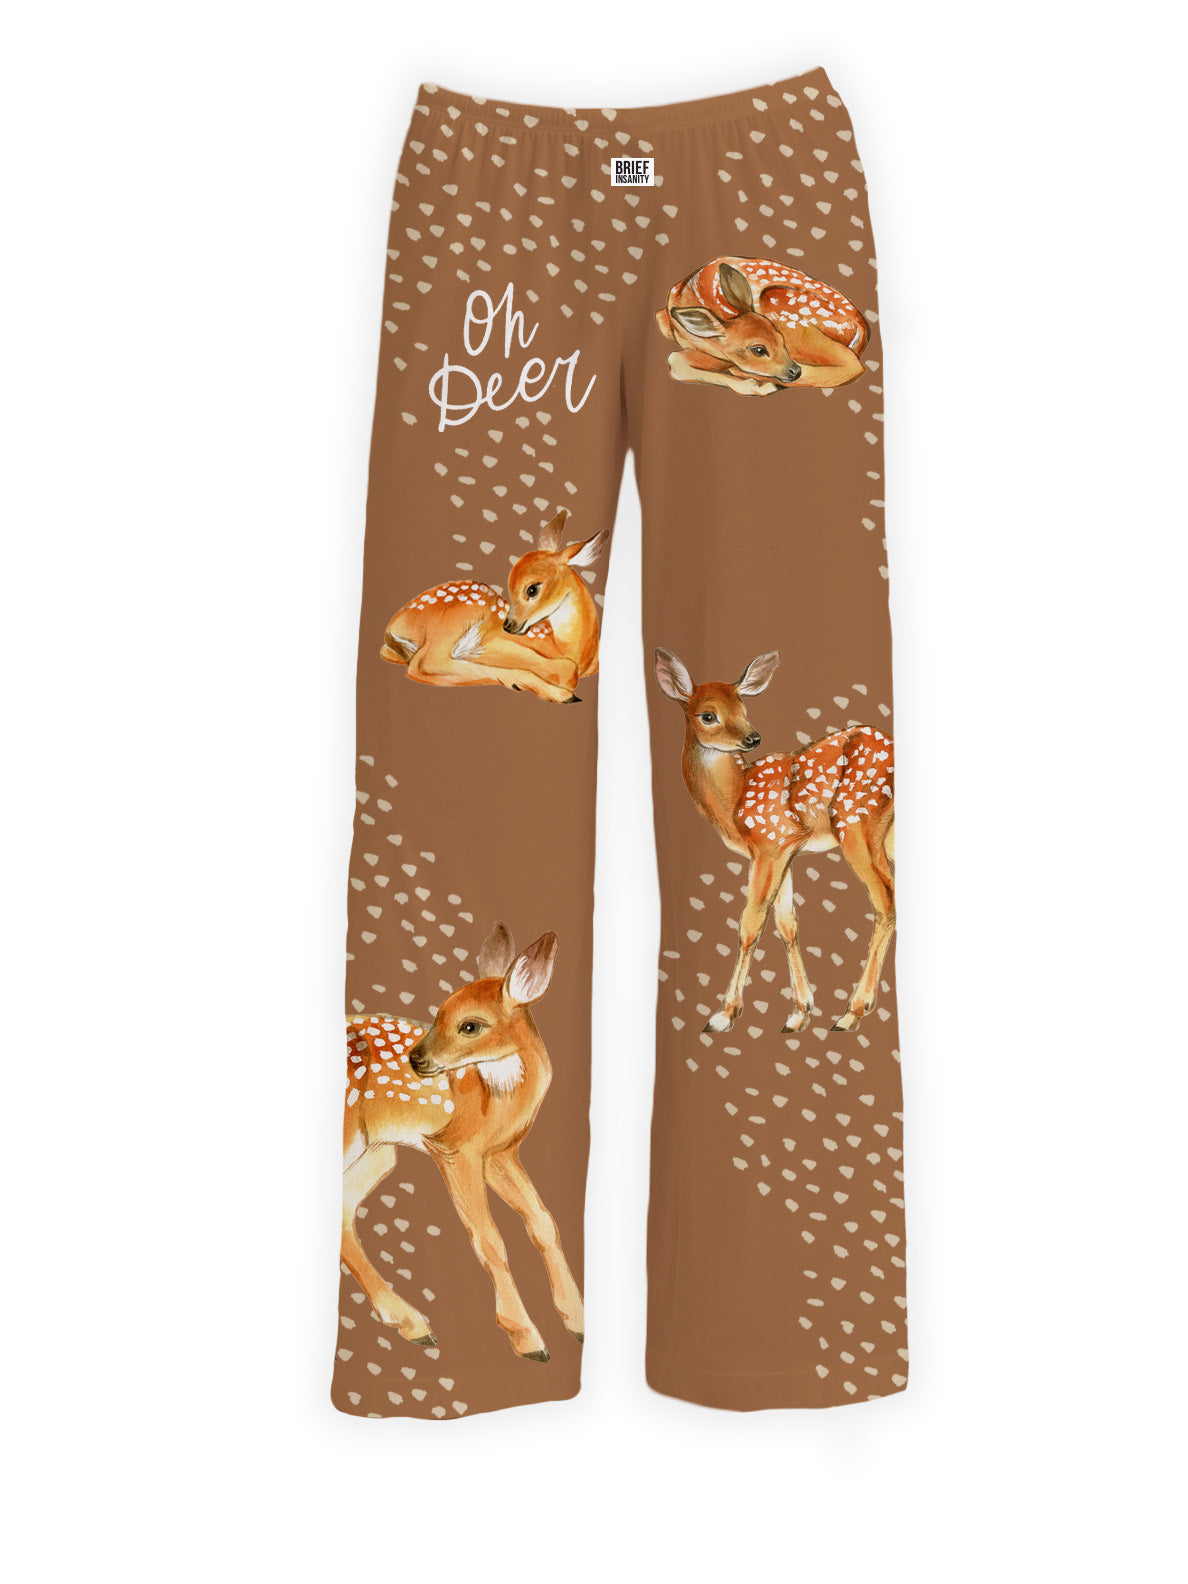 BRIEF INSANITY's Oh Deer Pajama Lounge Pants